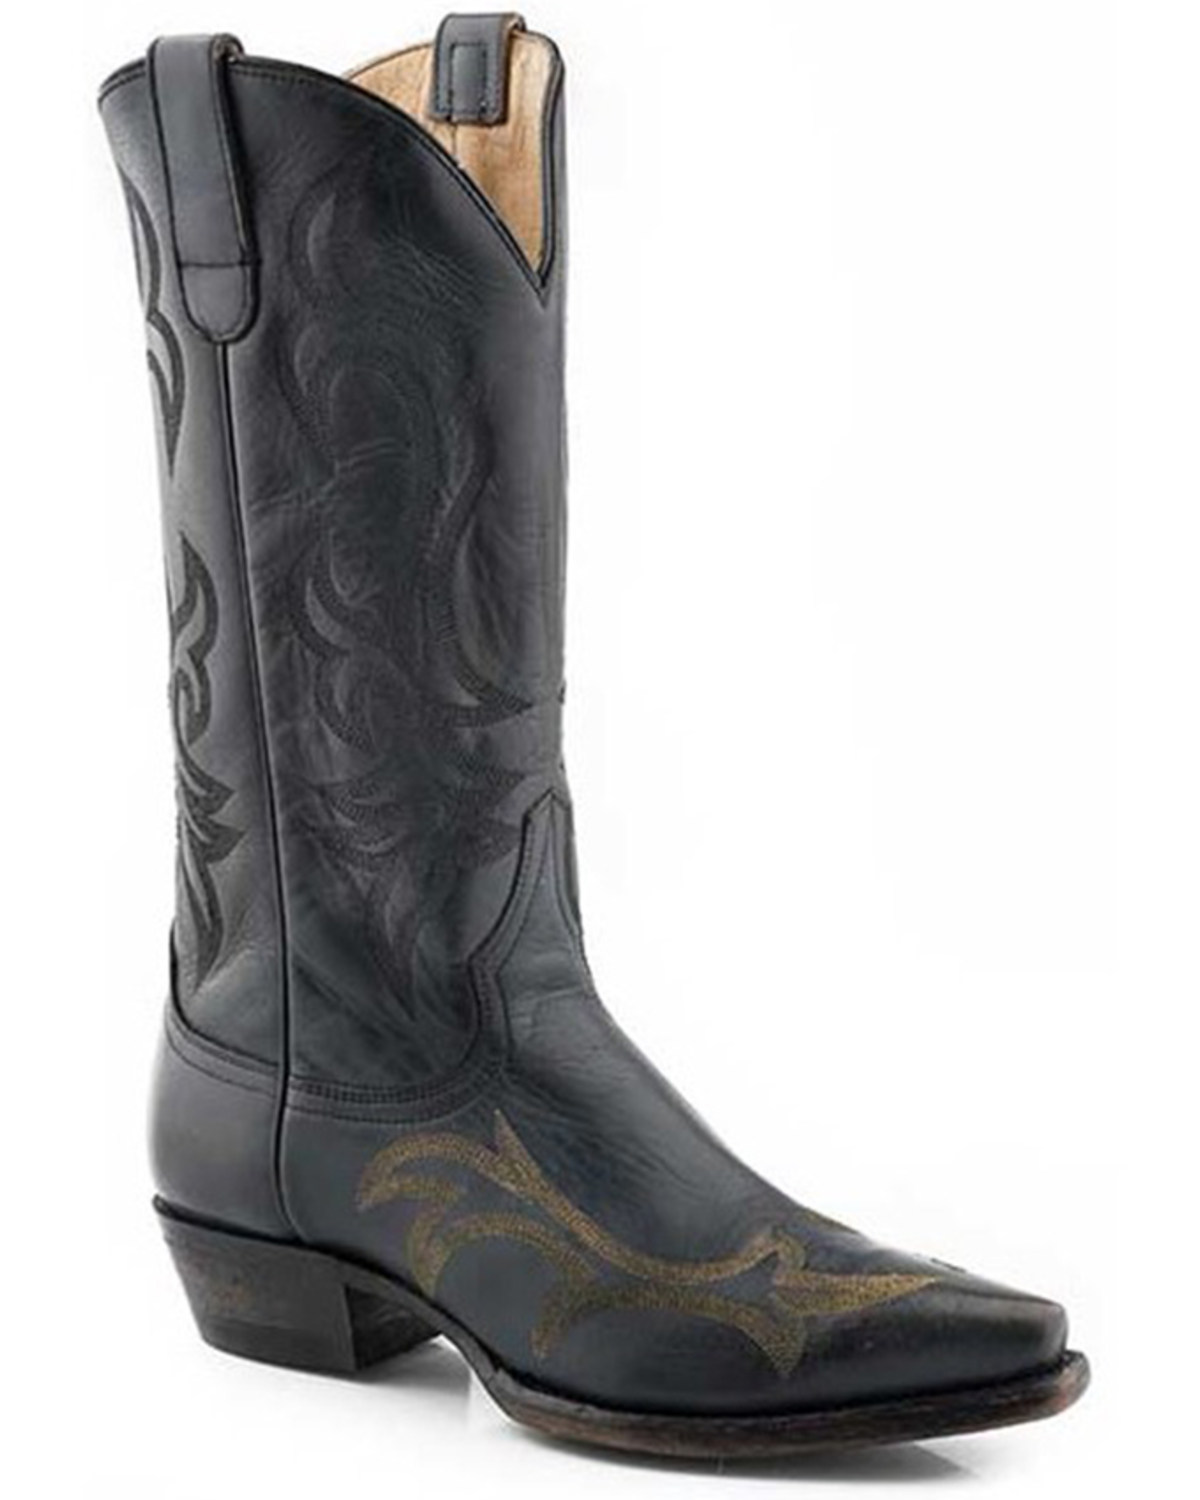 Stetson Women's Ari Western Boots - Snip Toe